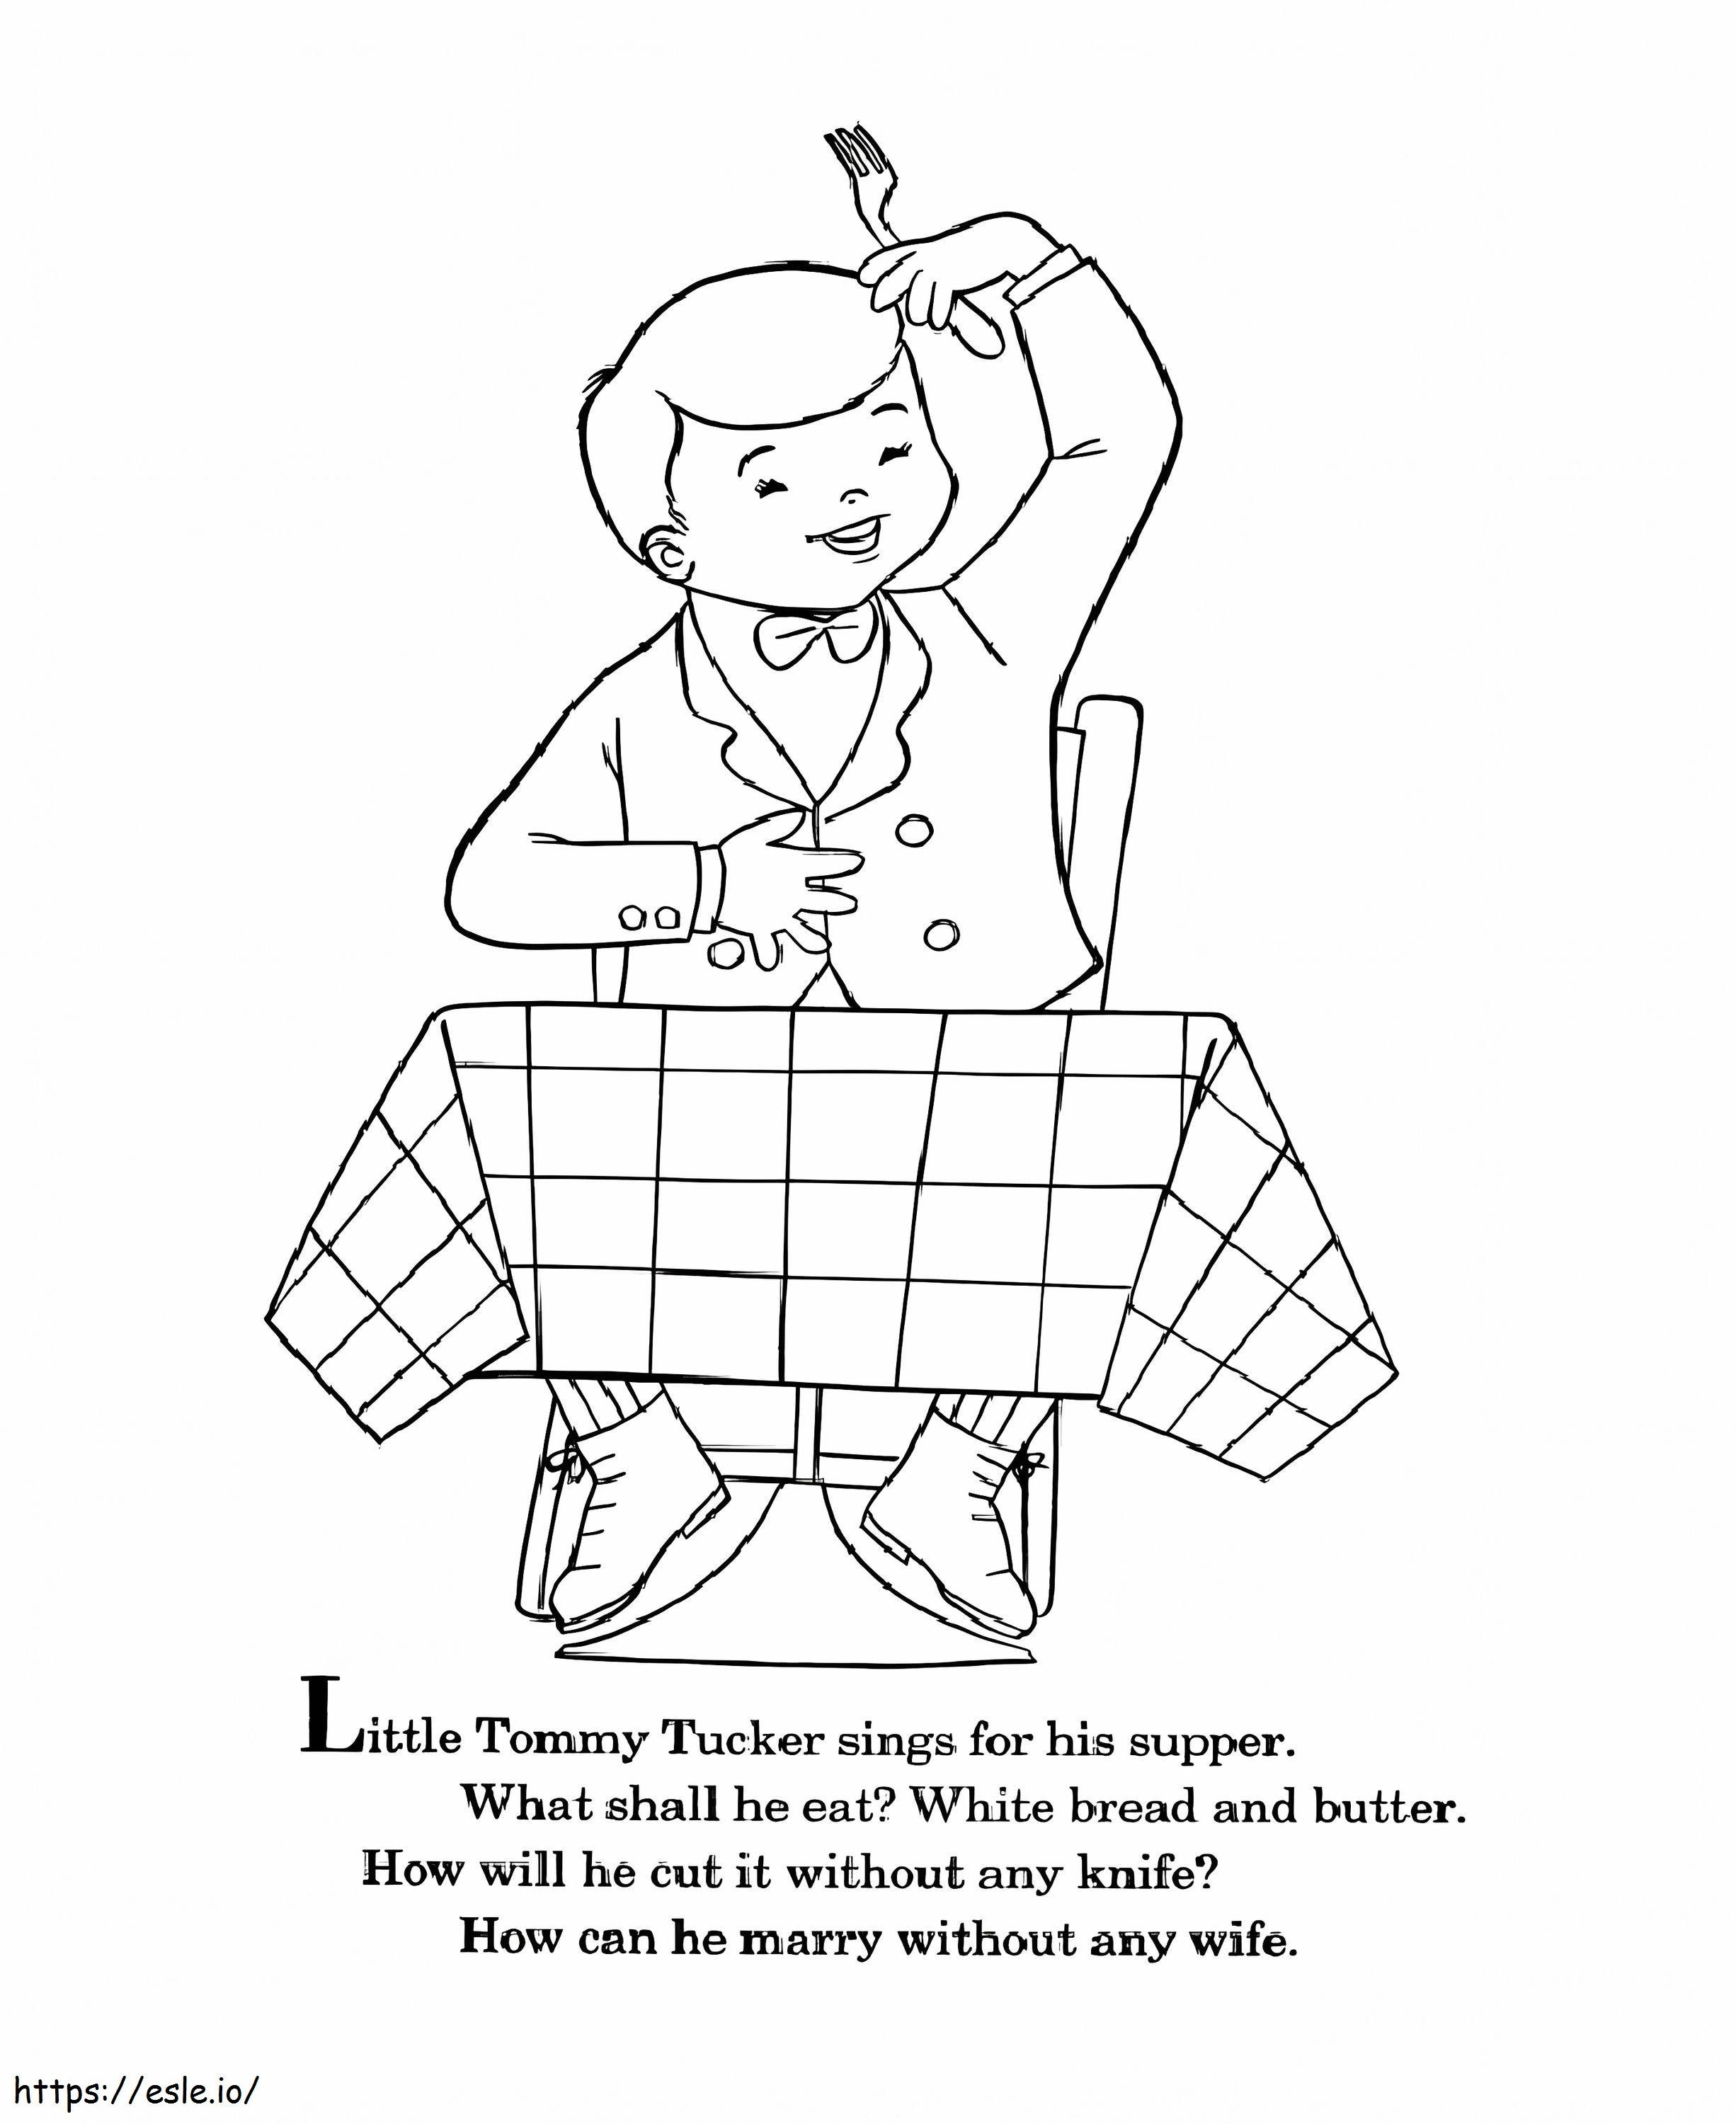 Rimas infantis do pequeno Tommy Tucker para colorir